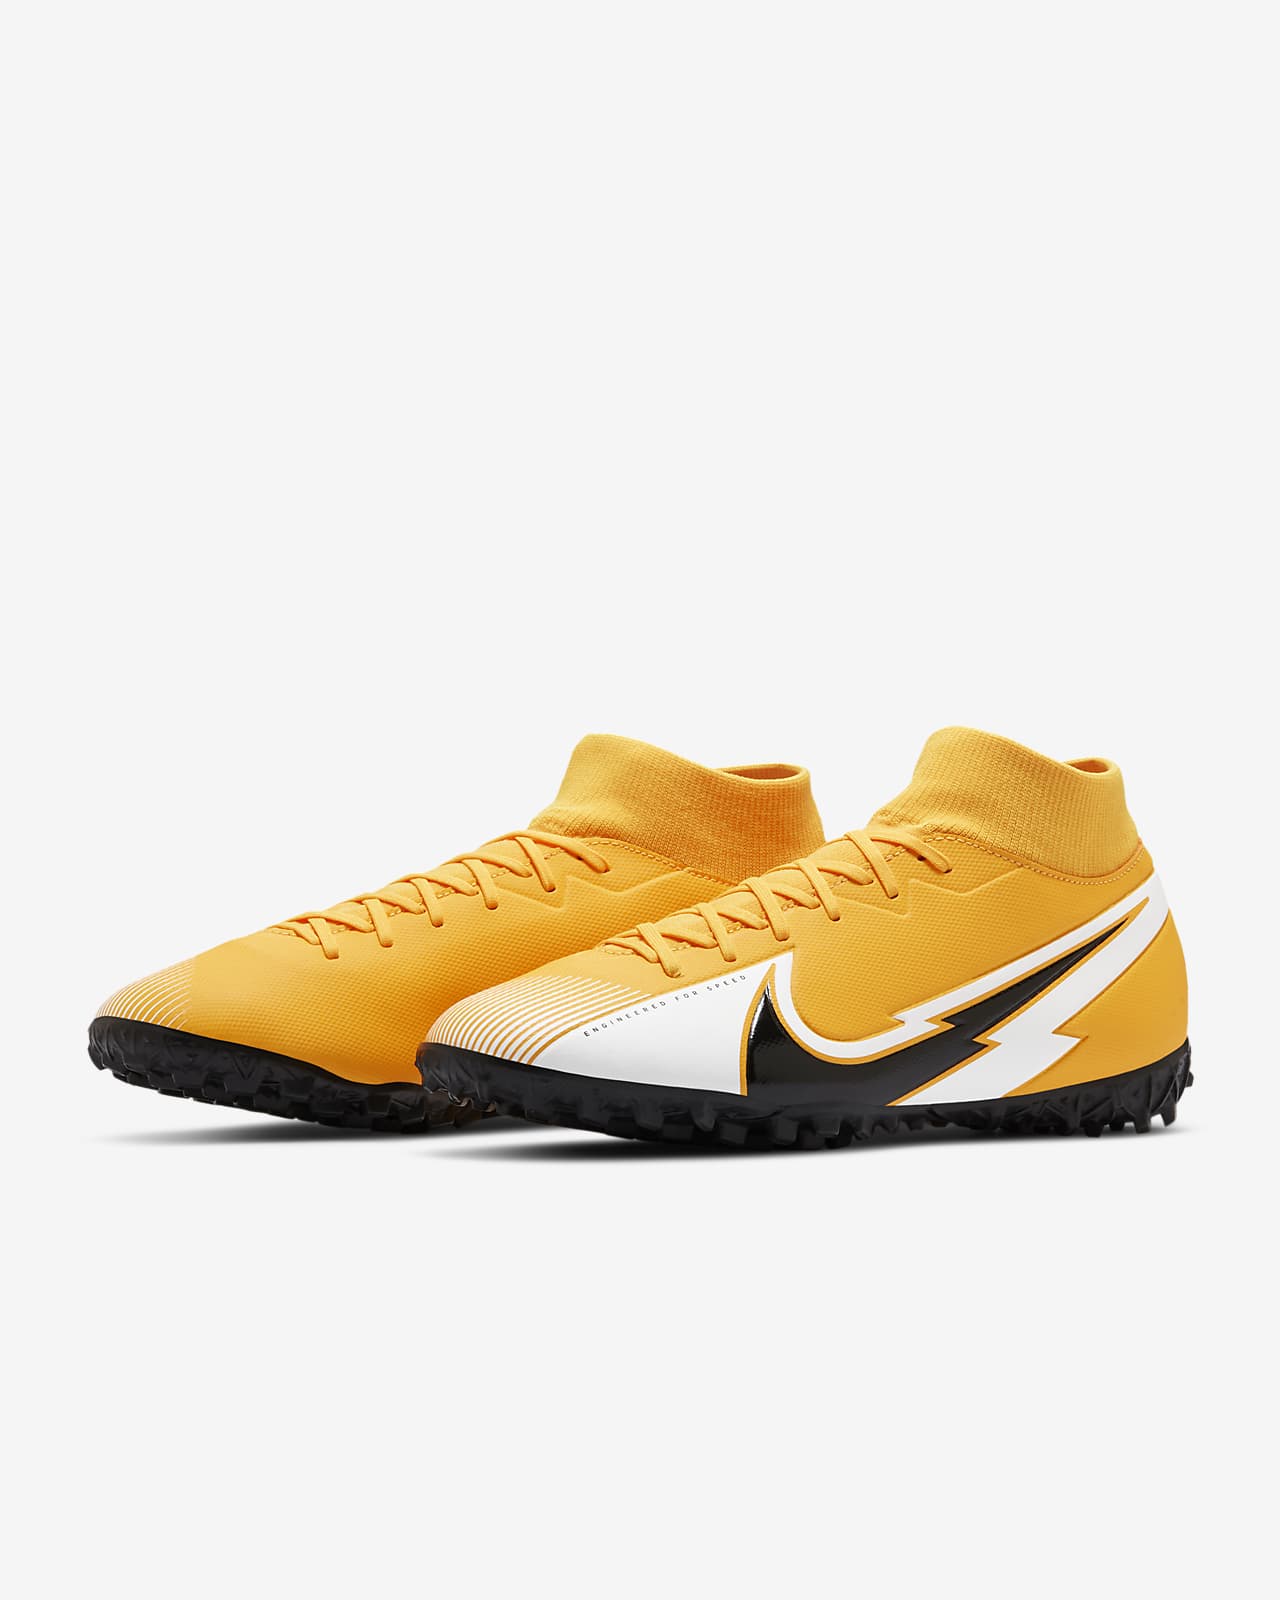 nike shoes 2019 football